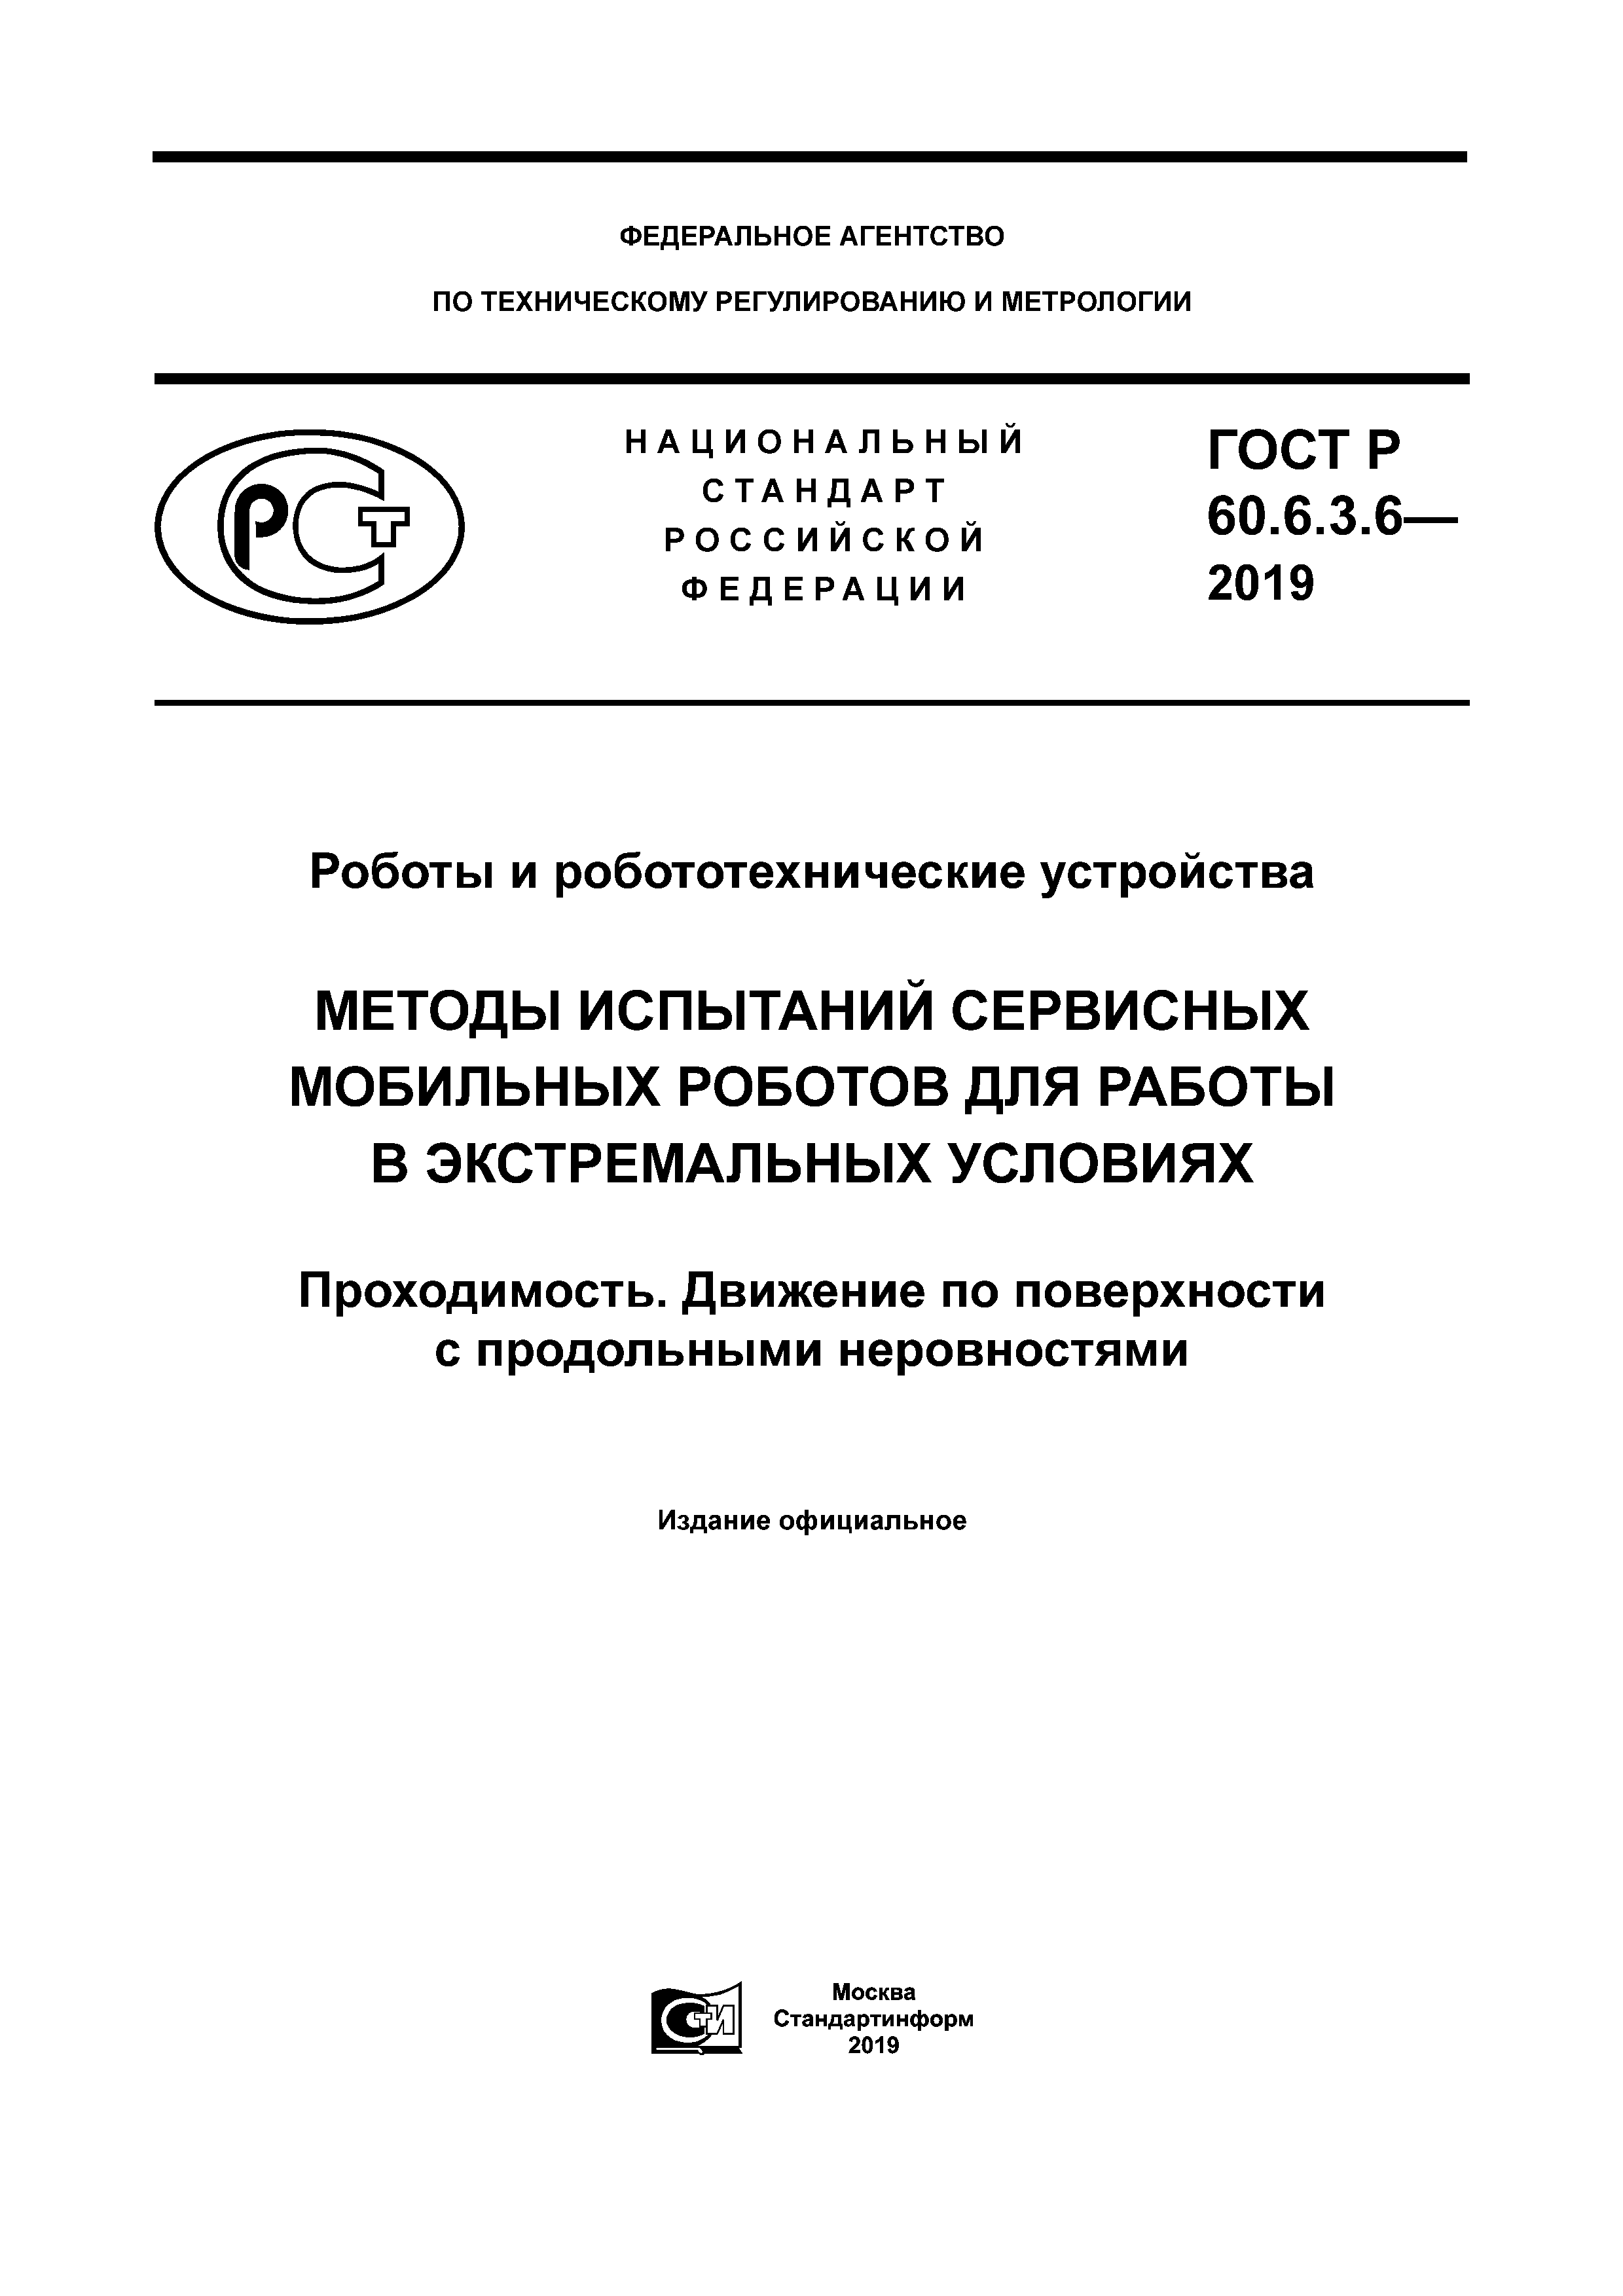 ГОСТ Р 60.6.3.6-2019